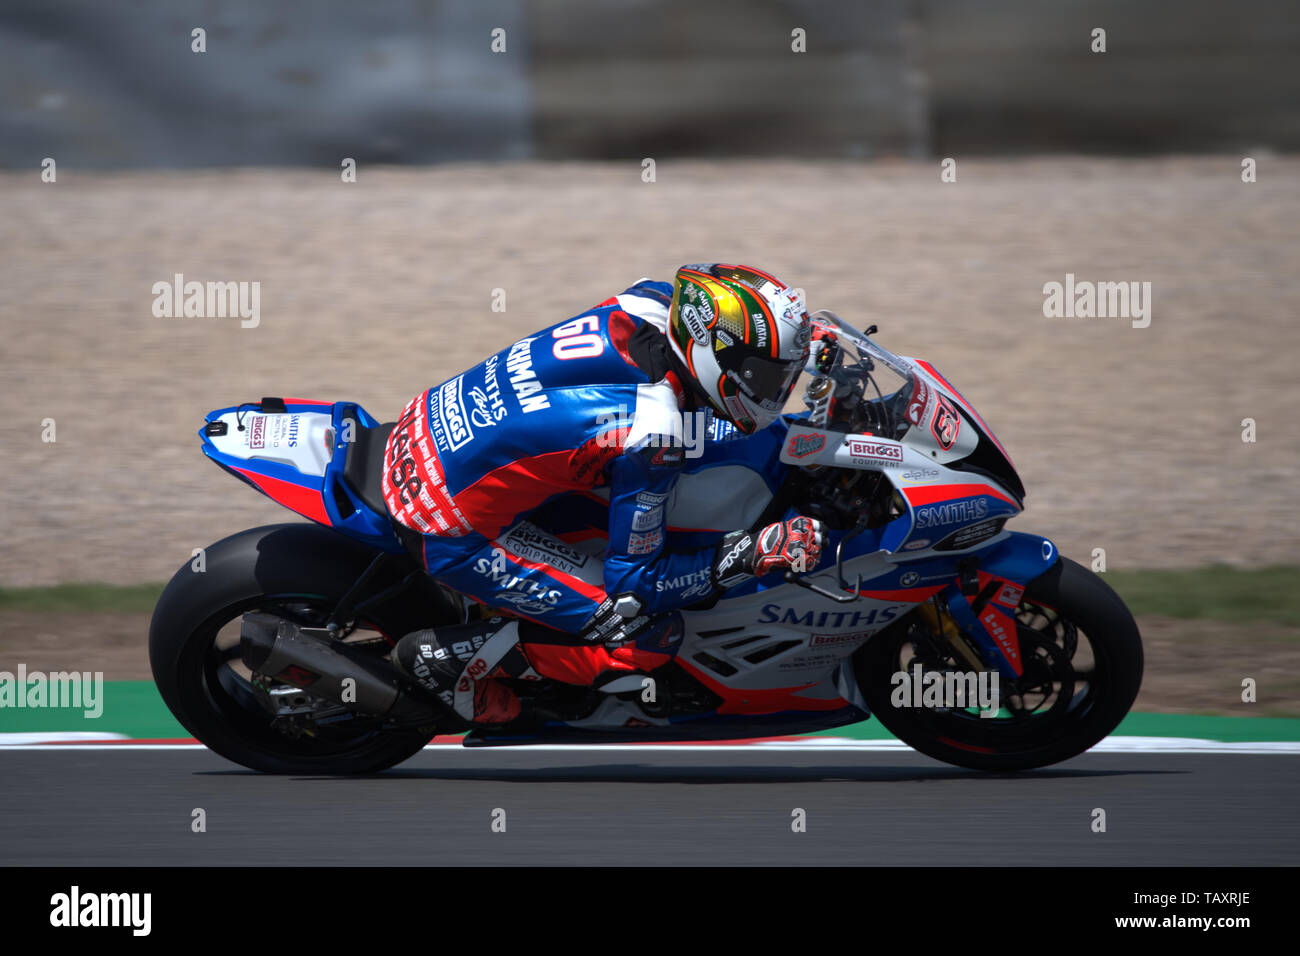 Peter Hickman racing in the British superbike championship at Donington park 2019 Stock Photo